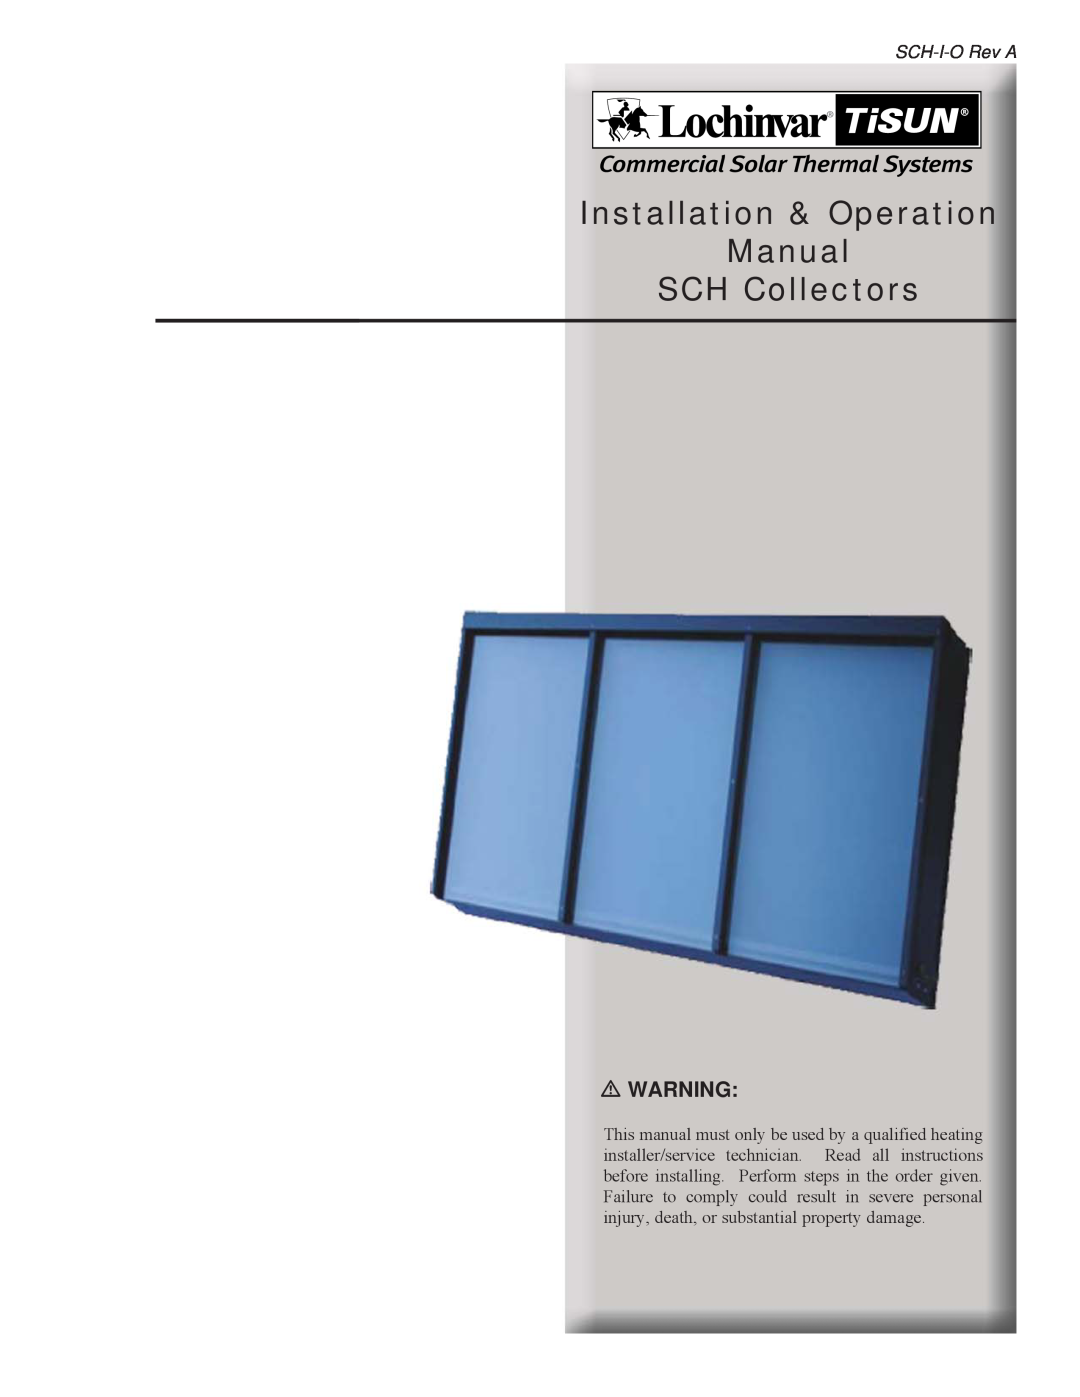 Lochinvar operation manual SCH-I-ORev A 